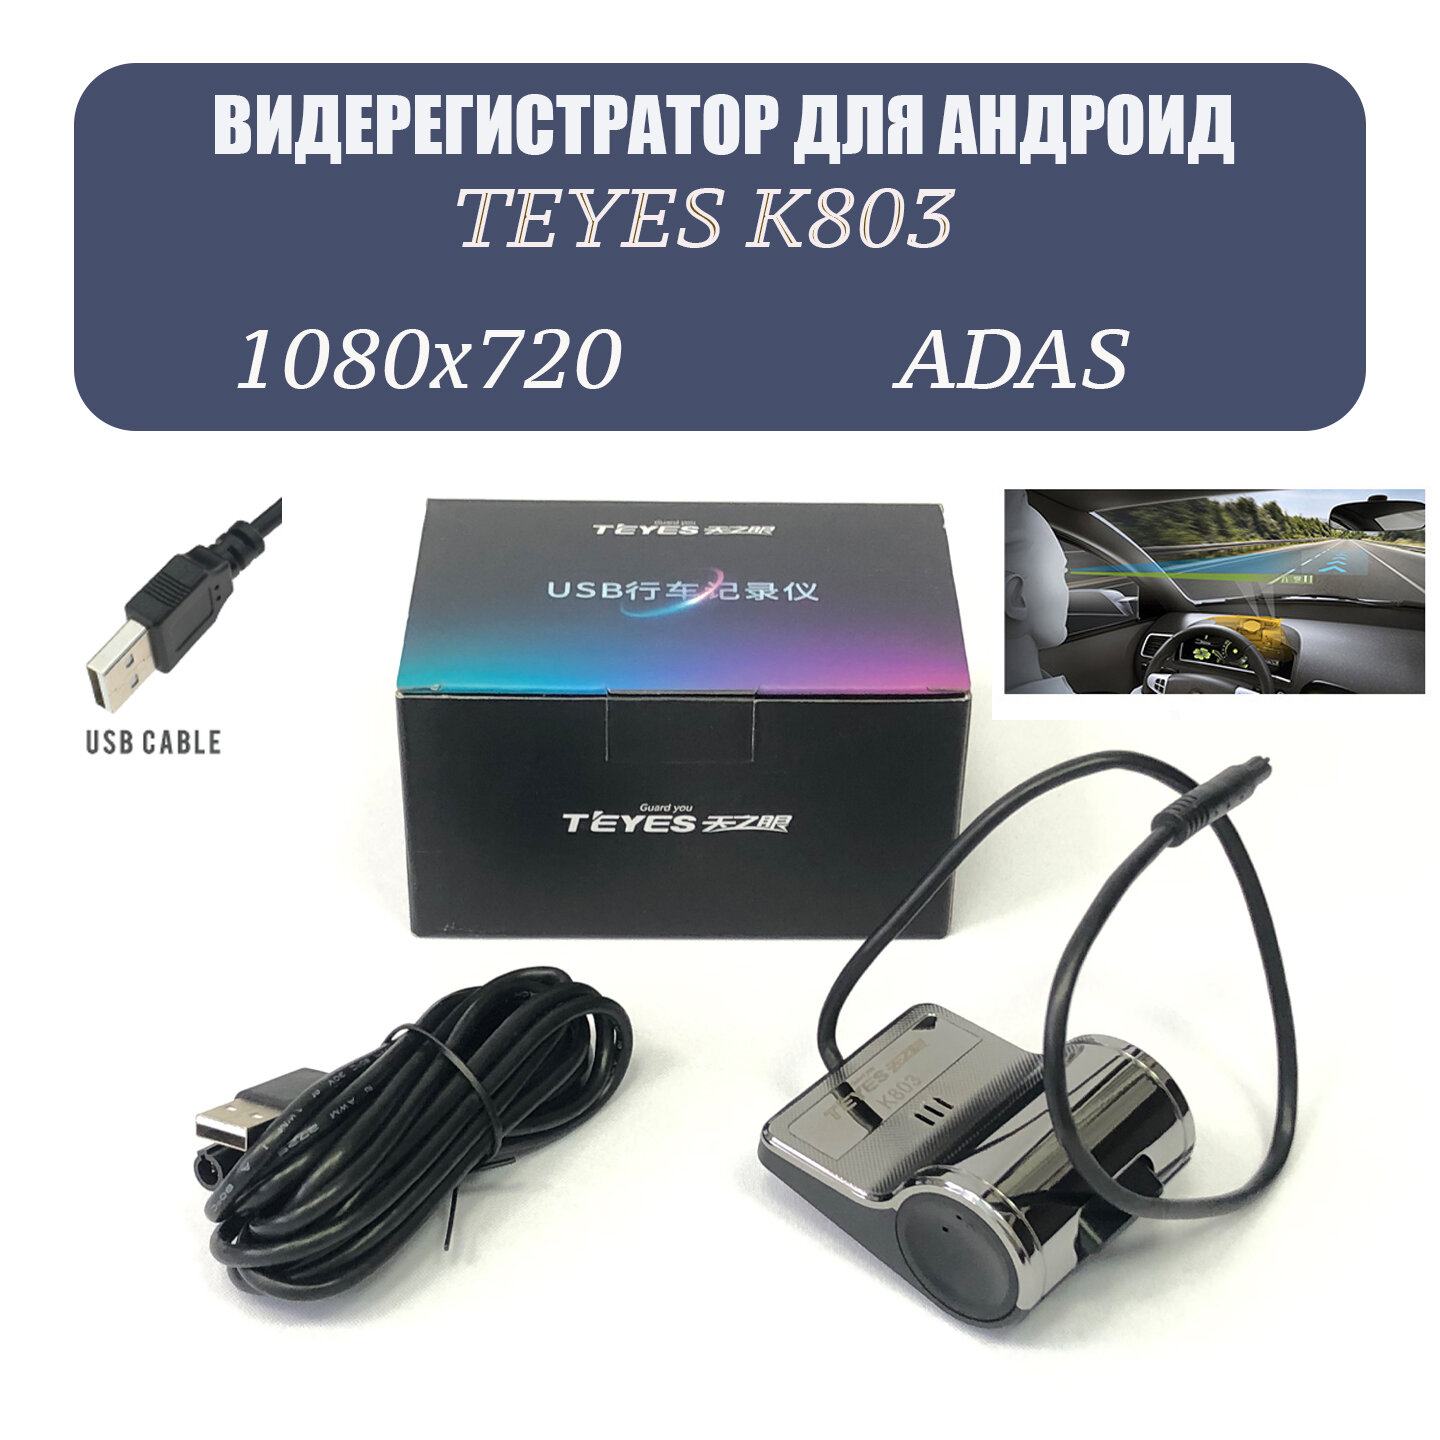 Видеорегистратор для андроид магнитол TEYES K803 1080x720p. с USB подключением